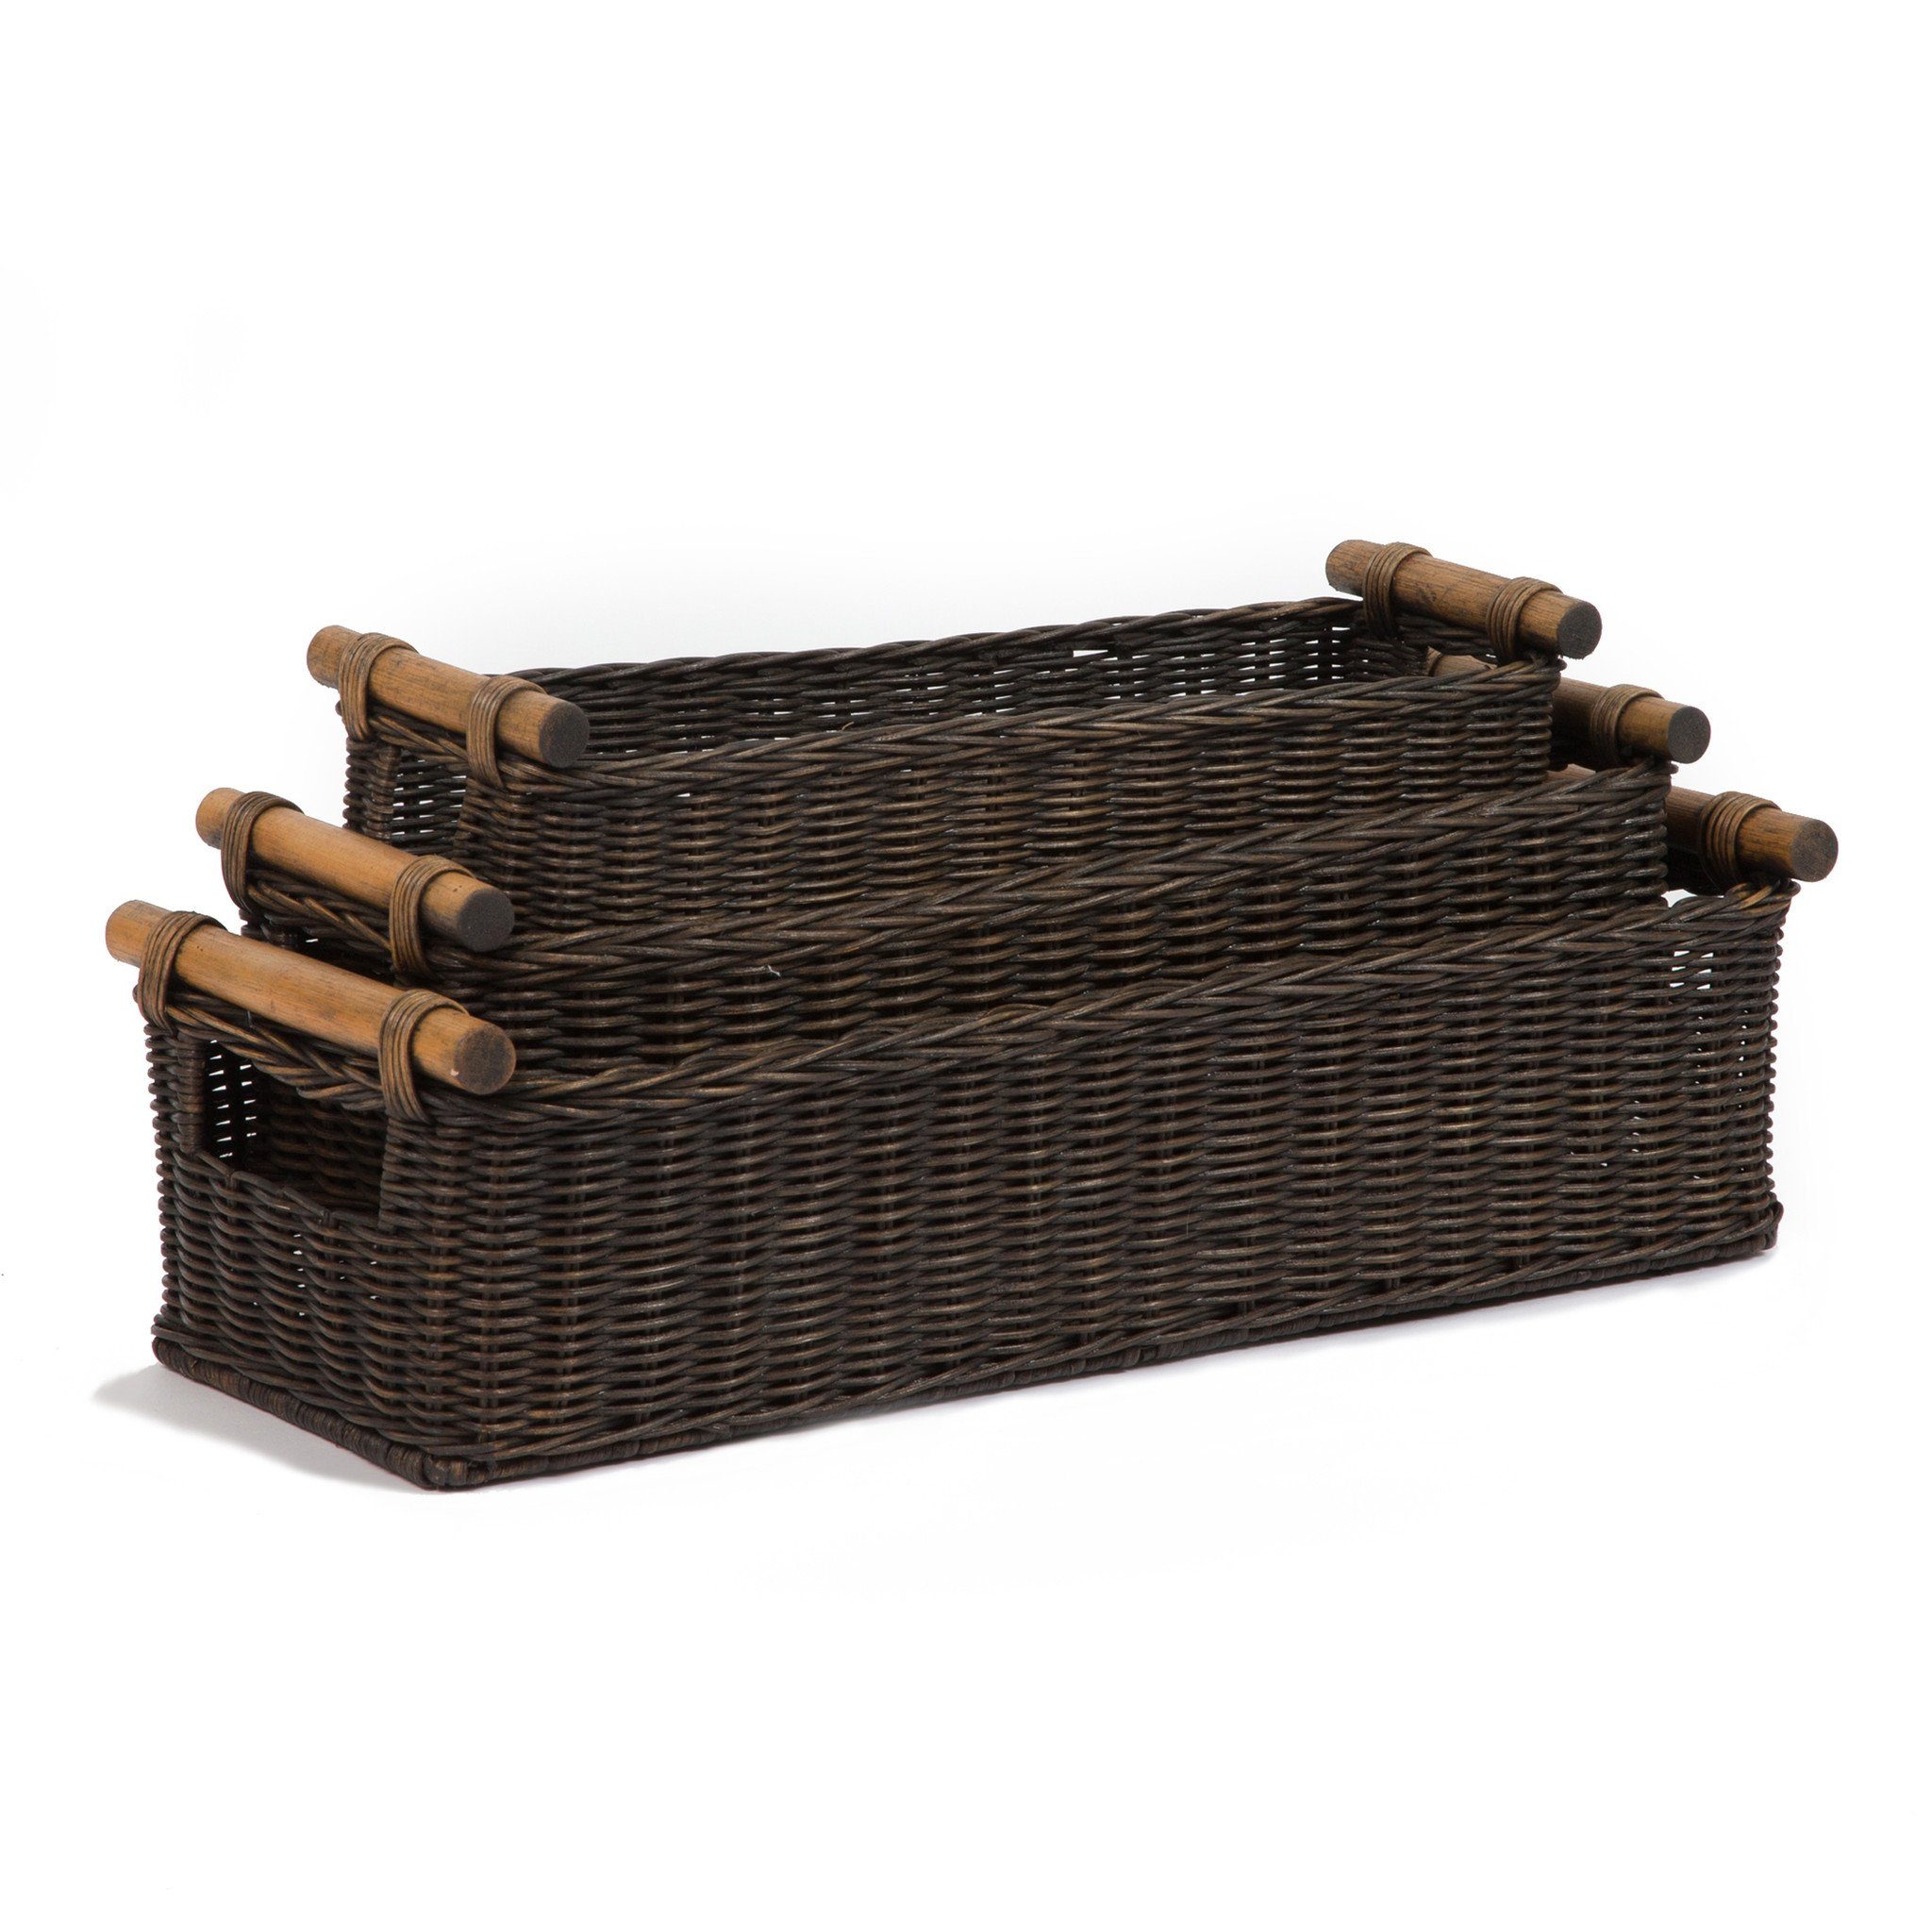 3 Pcs Woven storage Basket Toys Laundry Storage Bins w/Handle for Livingroom